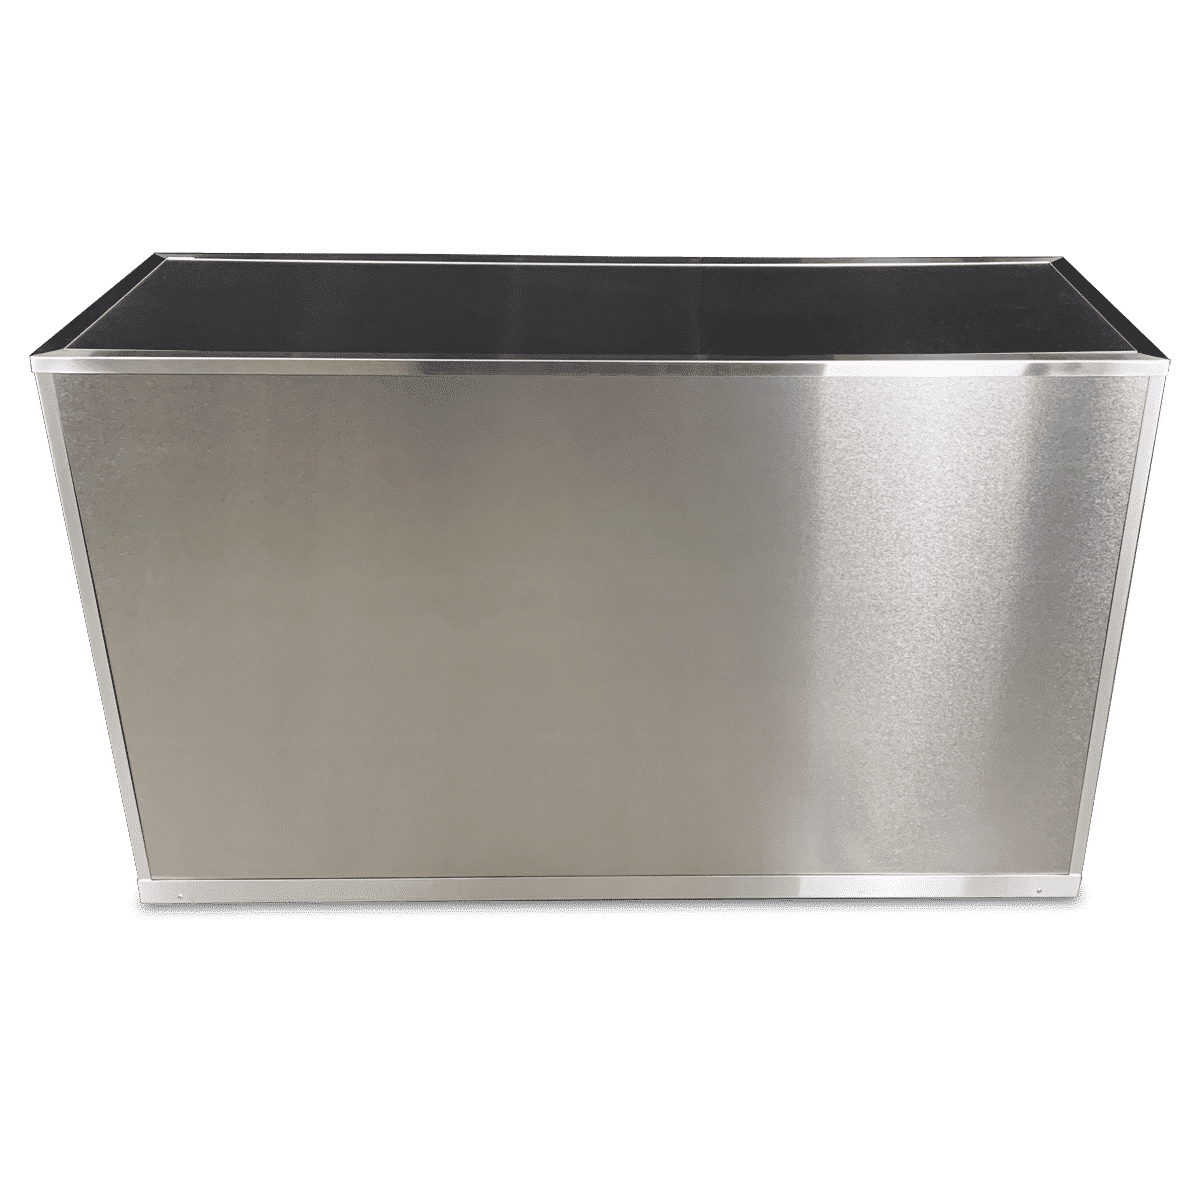 VERSATI Aluminum Brushed Stainless Steel Cover Panels